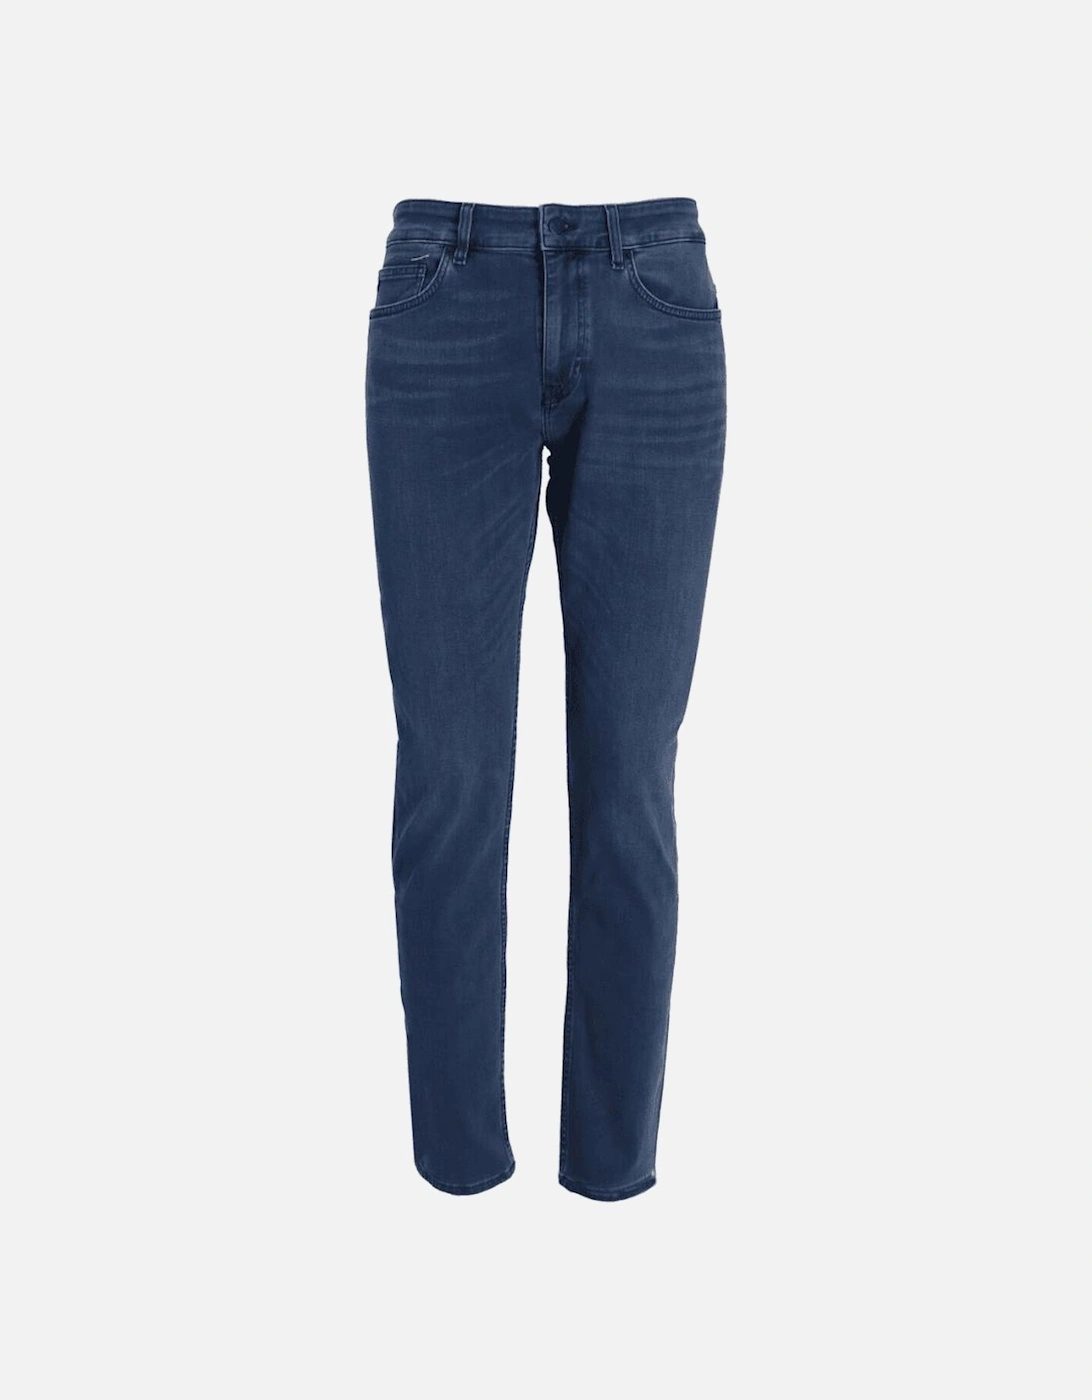 Delano Cashmere Slim Fit Dark Blue Jeans, 4 of 3